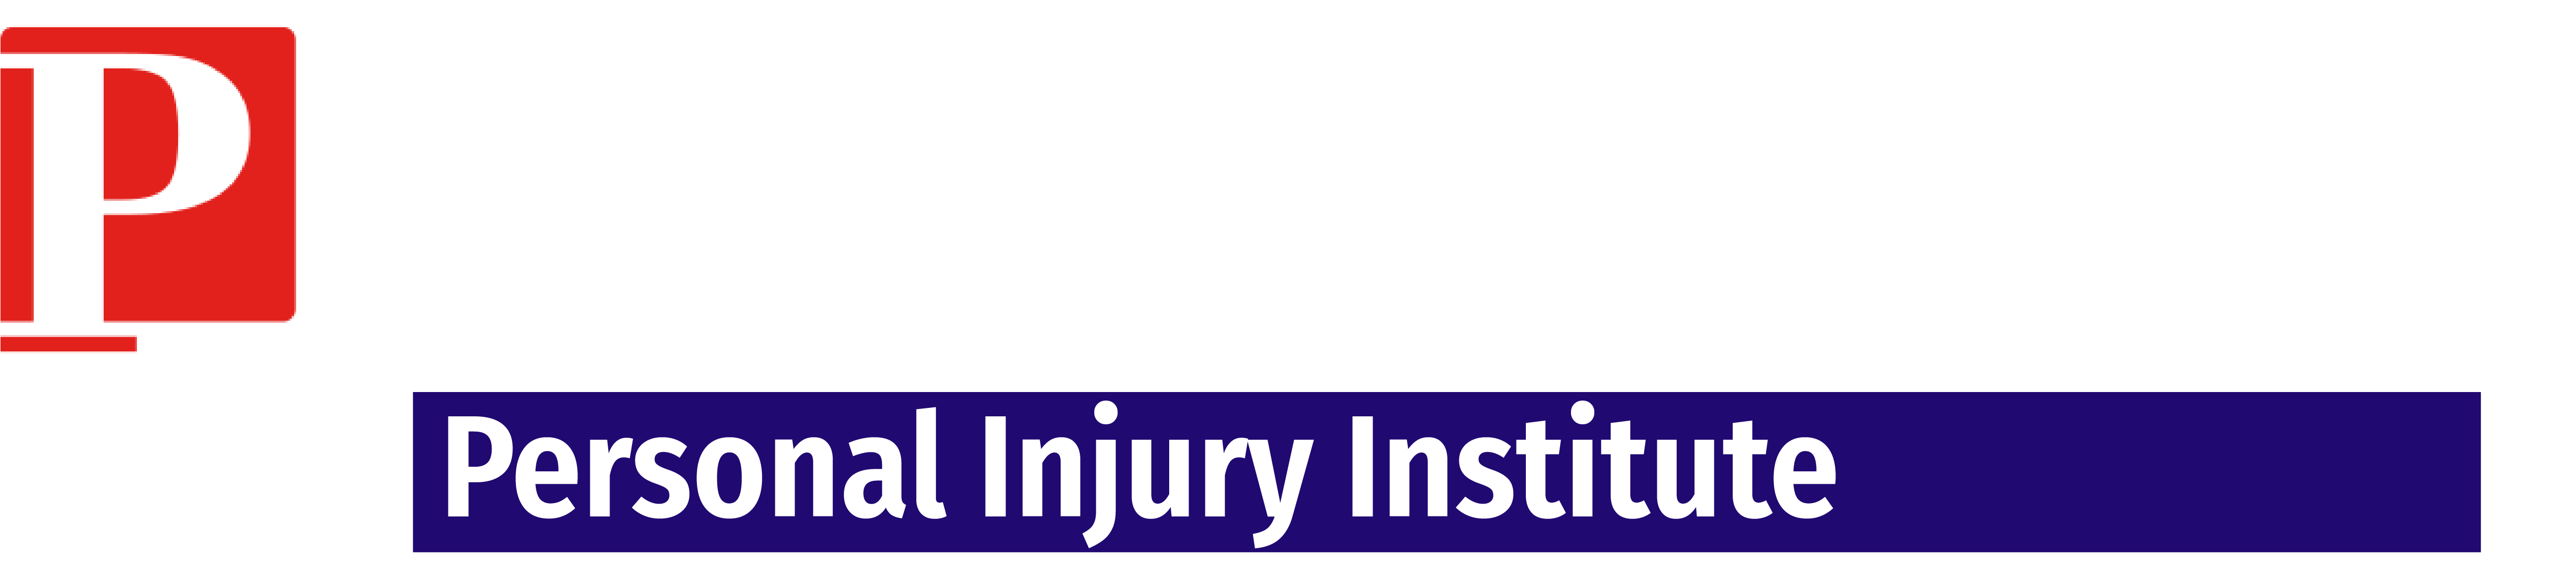 Primerus Personal Injury Institute Logo - White